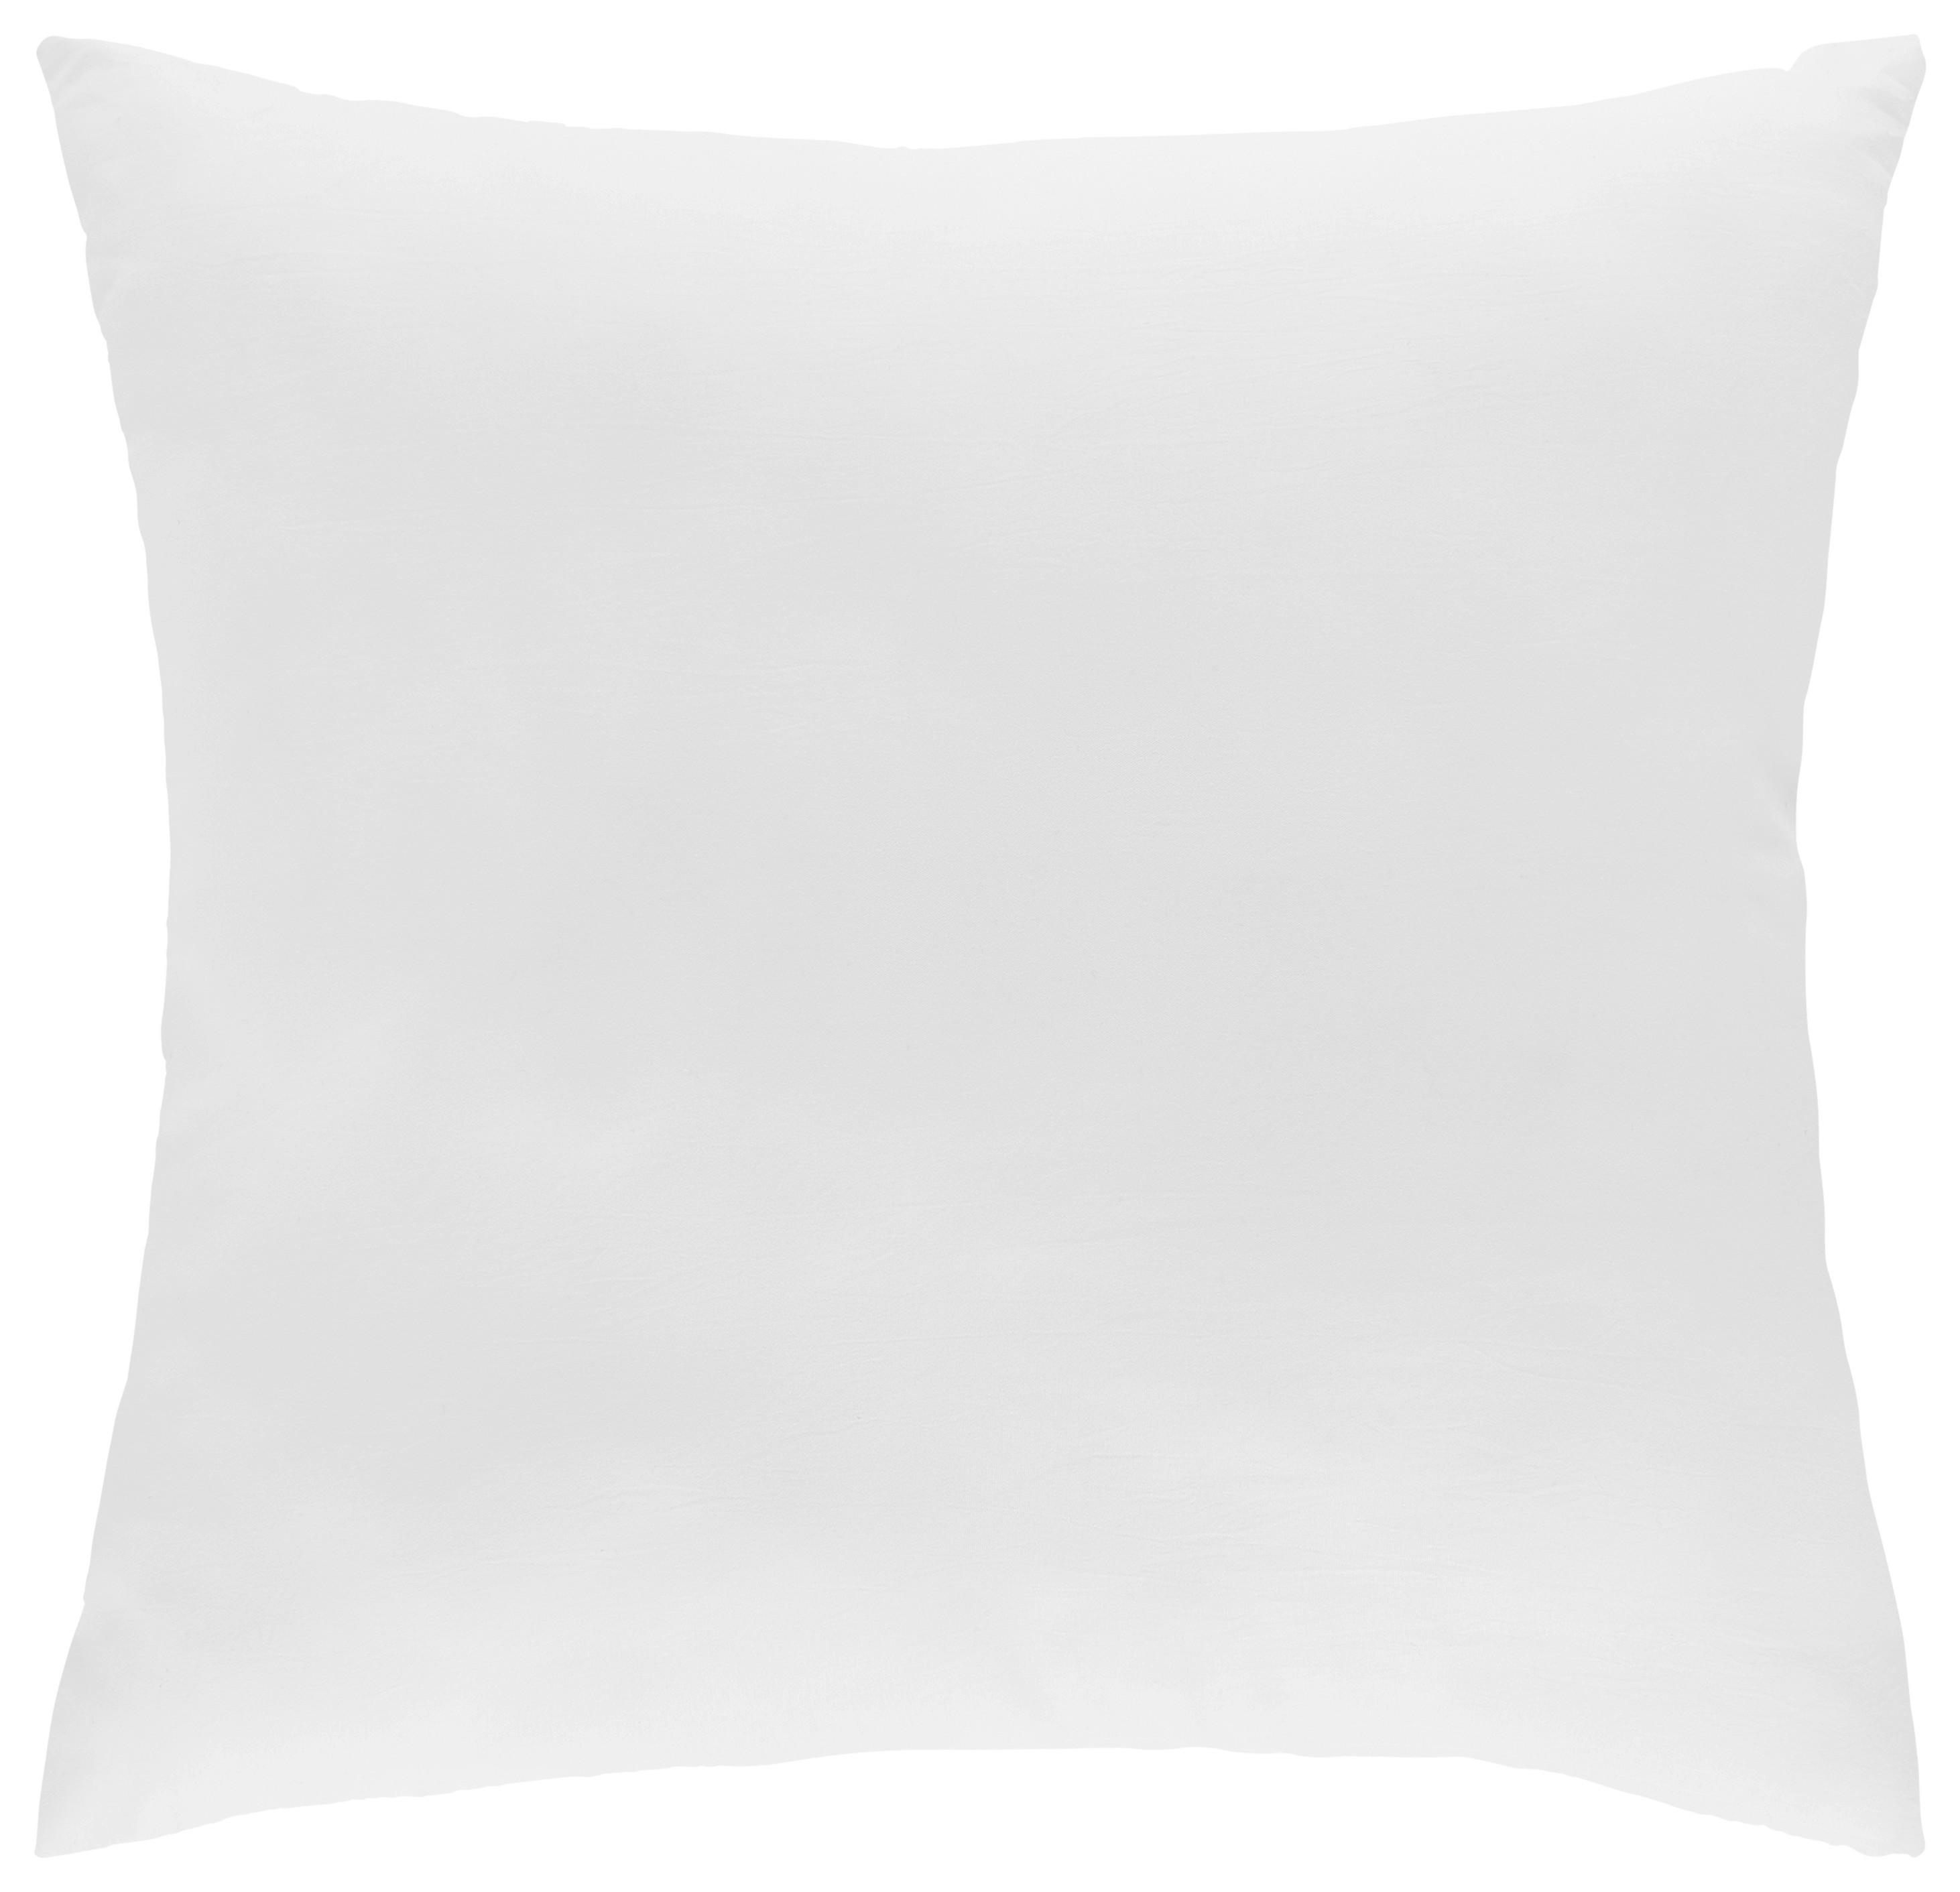 Výplňový Vankúš Ani, 50/50cm, Biela - biela, textil (50/50cm) - Modern Living